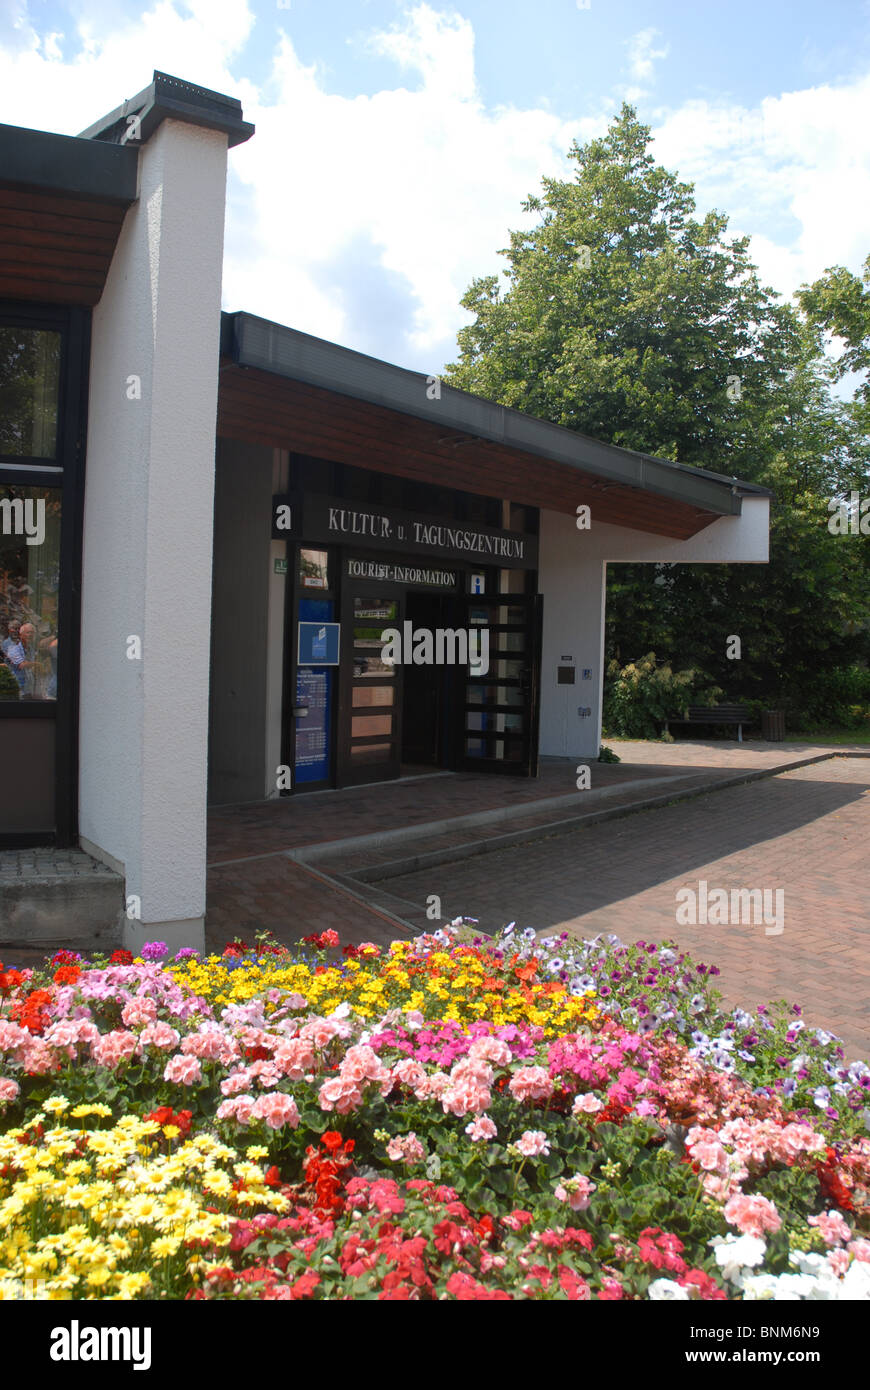 Concert Hall &Tourist Information Office, Murnau am Staffelsee, Garmisch-Partenkirchen, Oberbayern, Bavaria, Germany Stock Photo